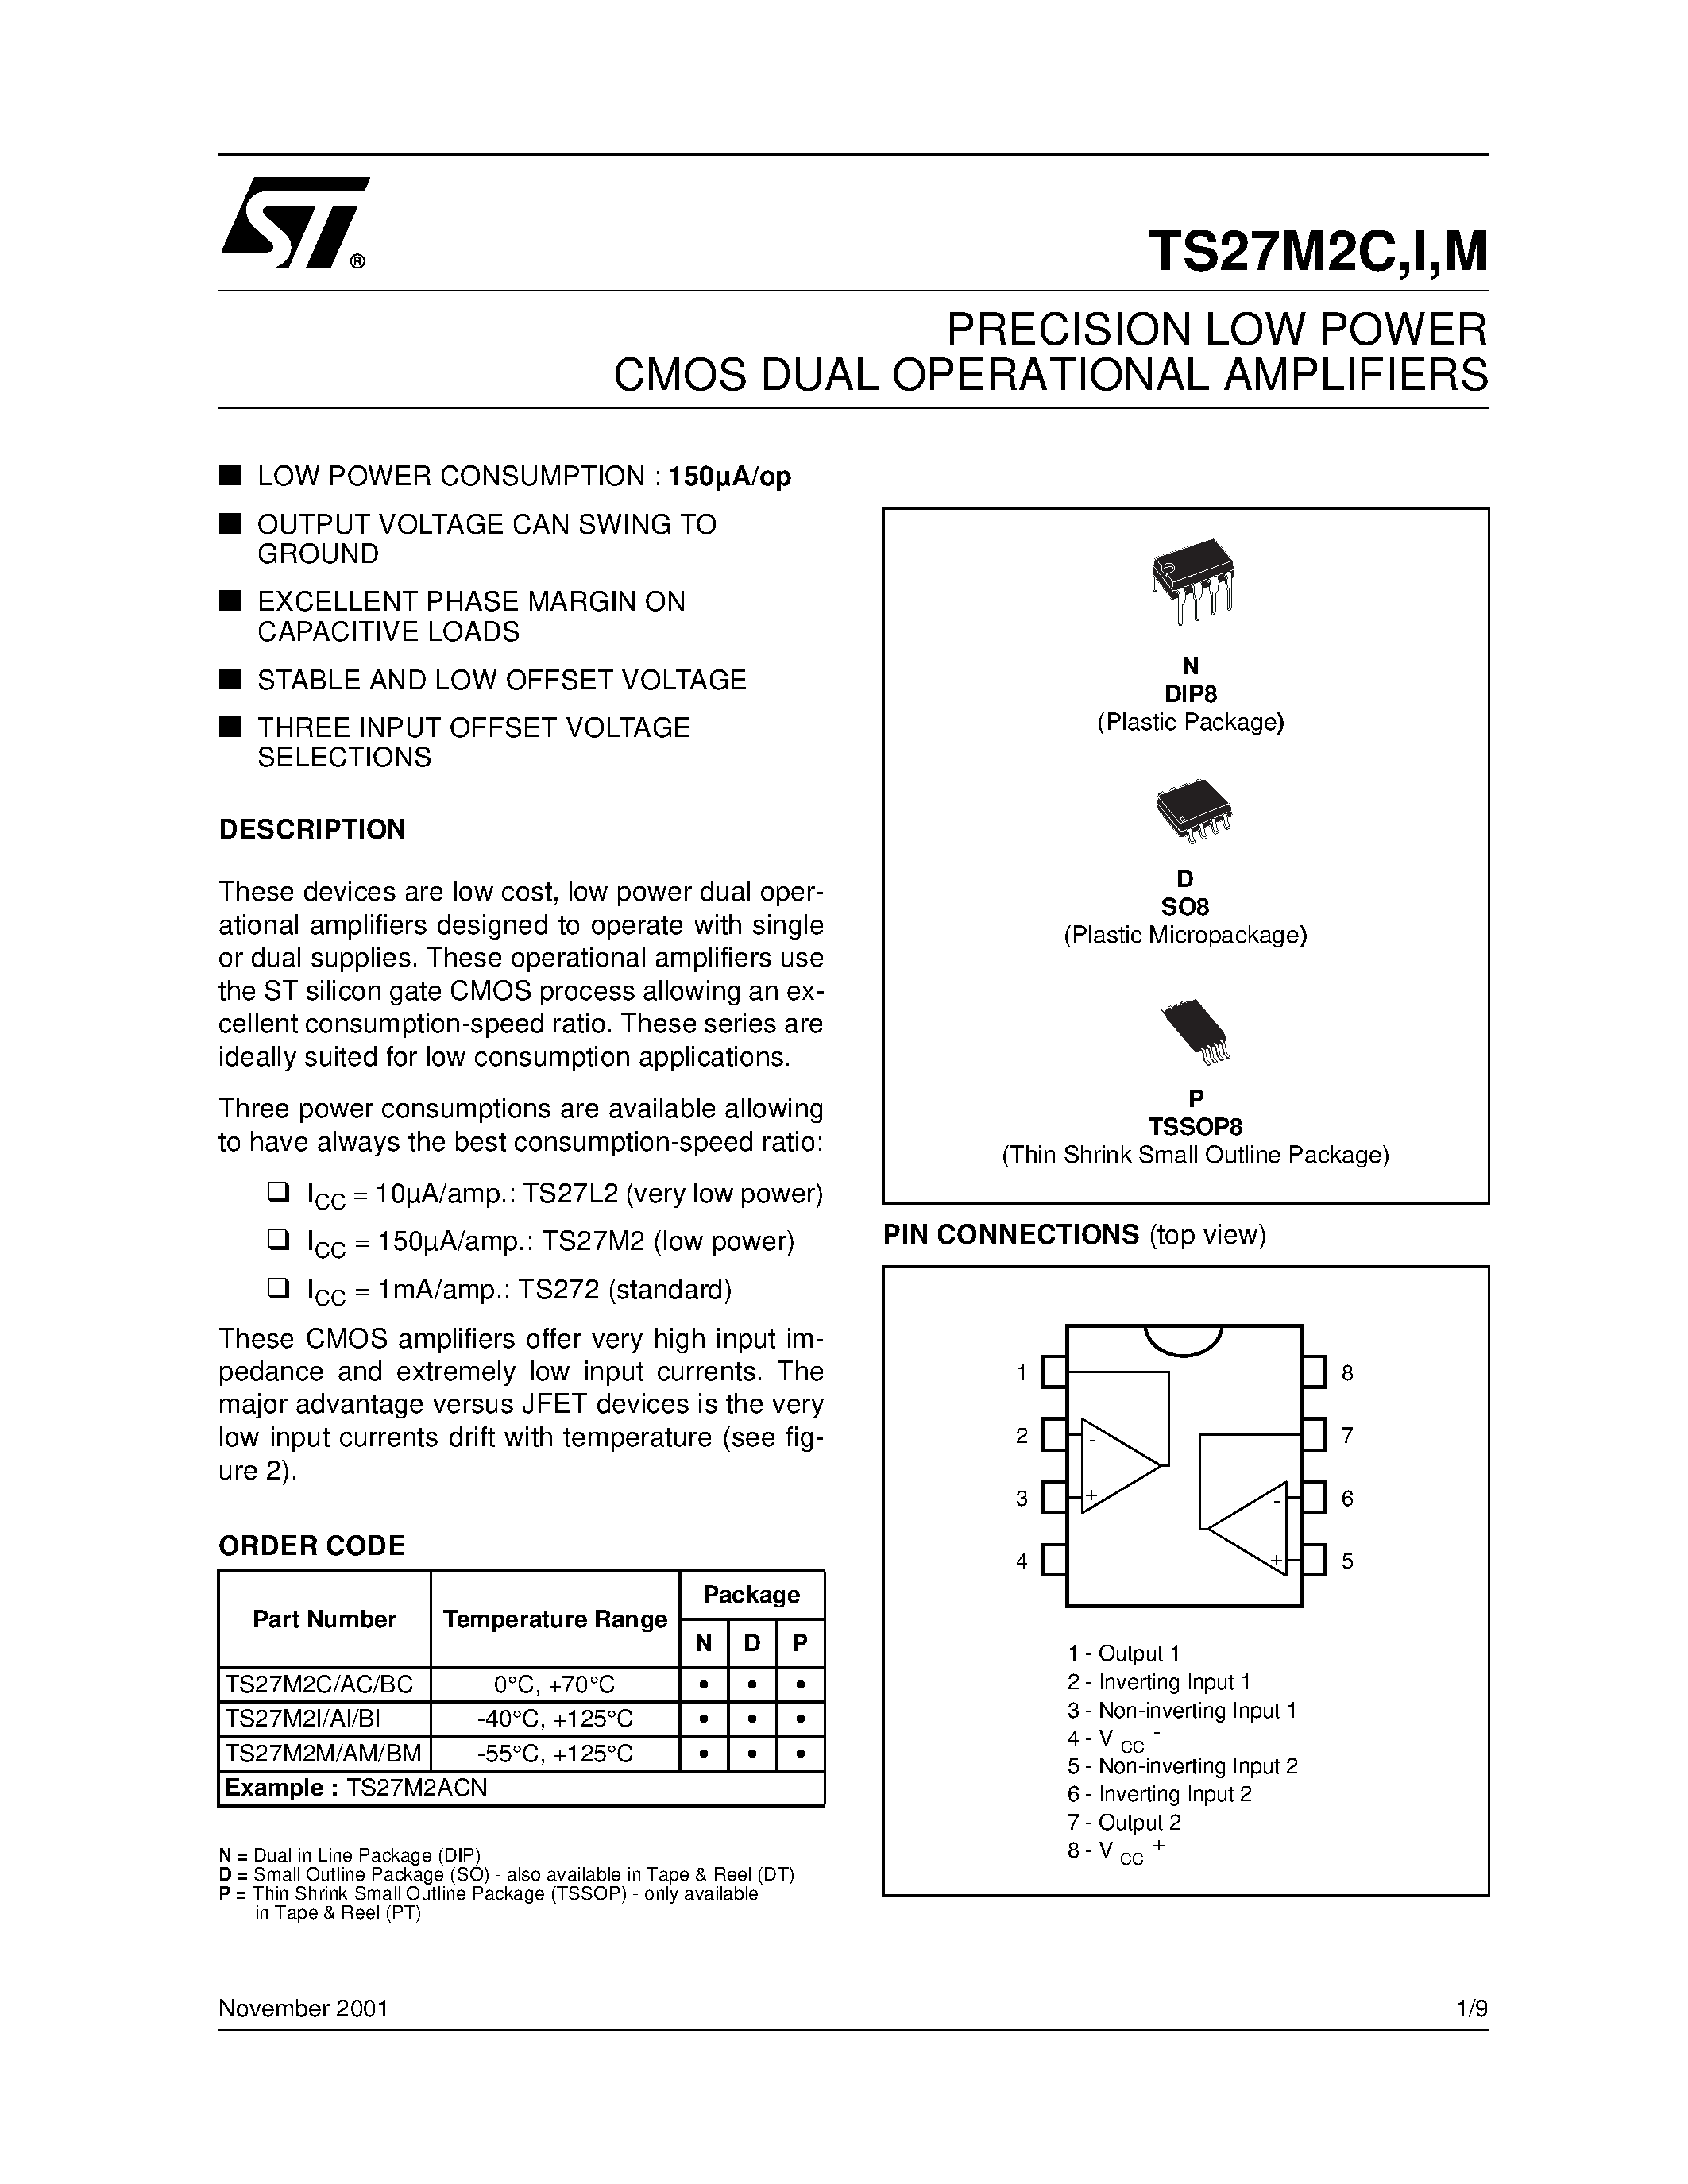 Datasheet TS27M2BM - PRECISION LOW POWER CMOS DUAL OPERATIONAL AMPLIFIERS page 1